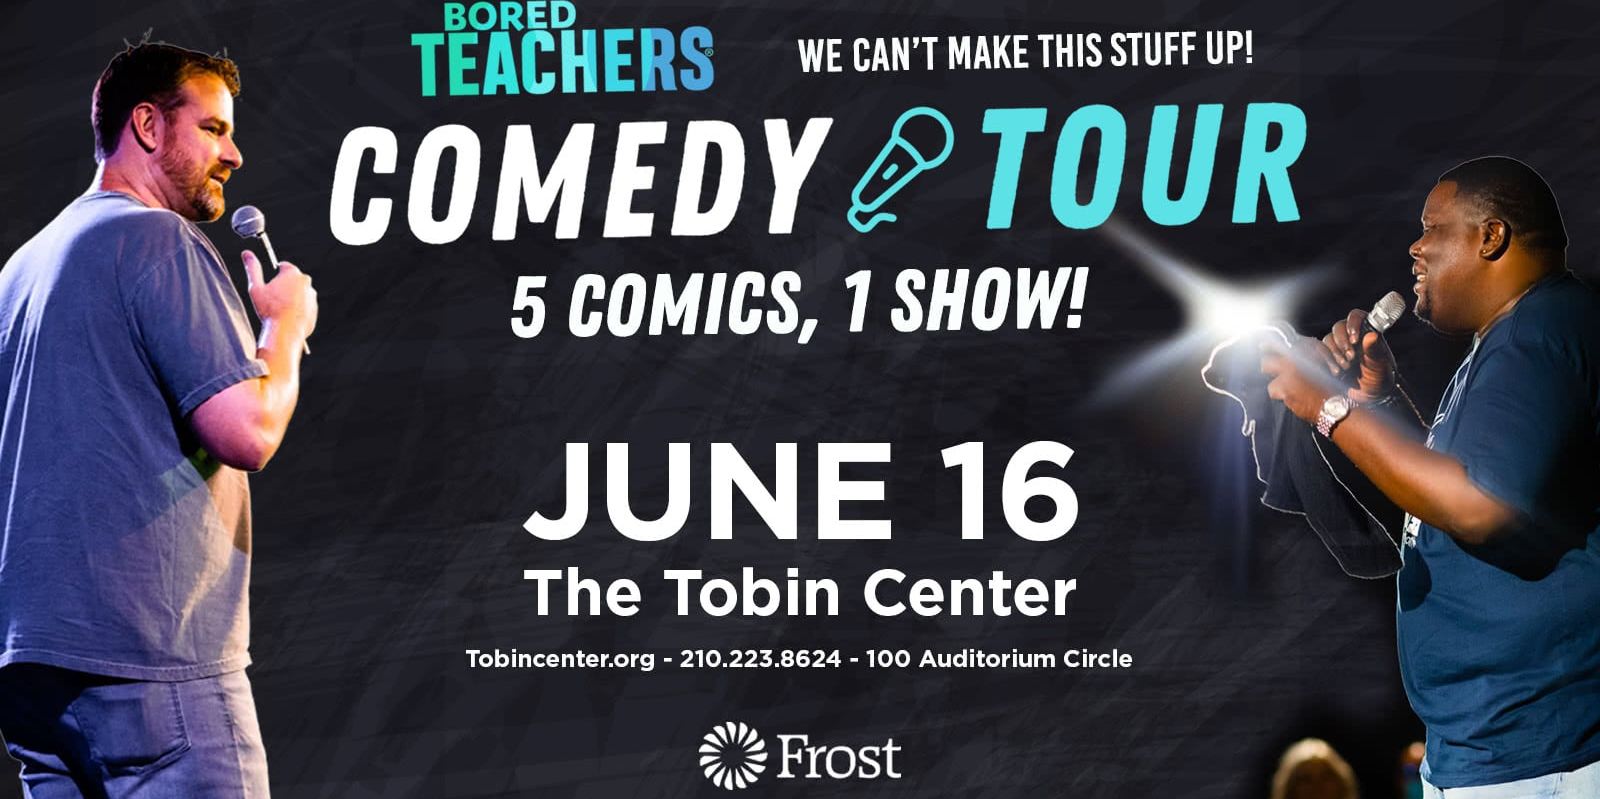 Bored Teachers Comedy Tour promotional image